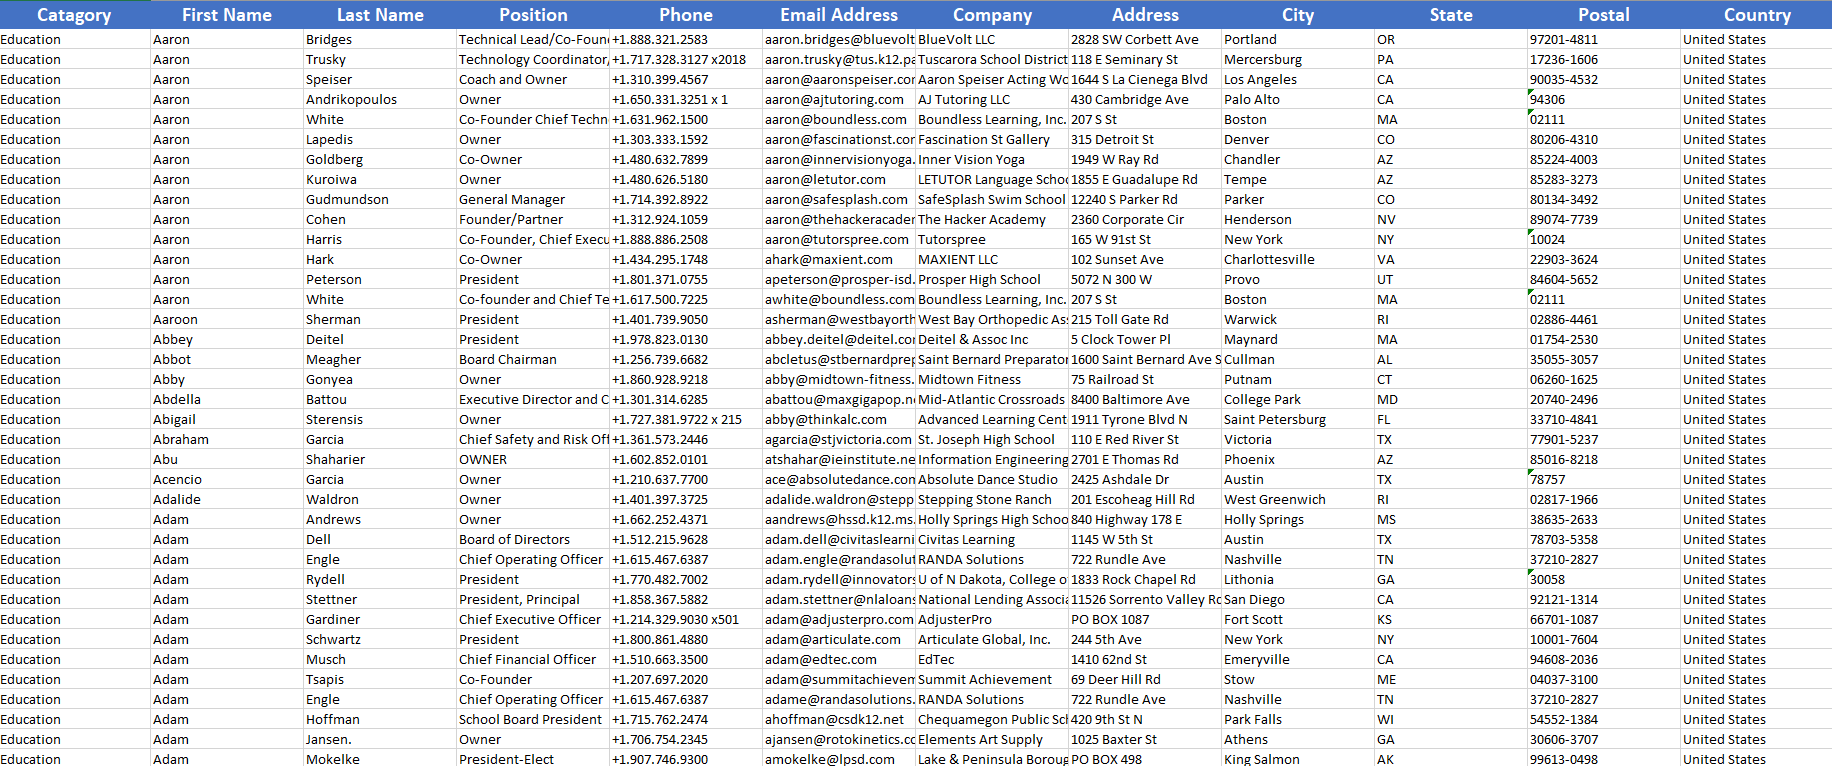 Education Email Database Sample Data